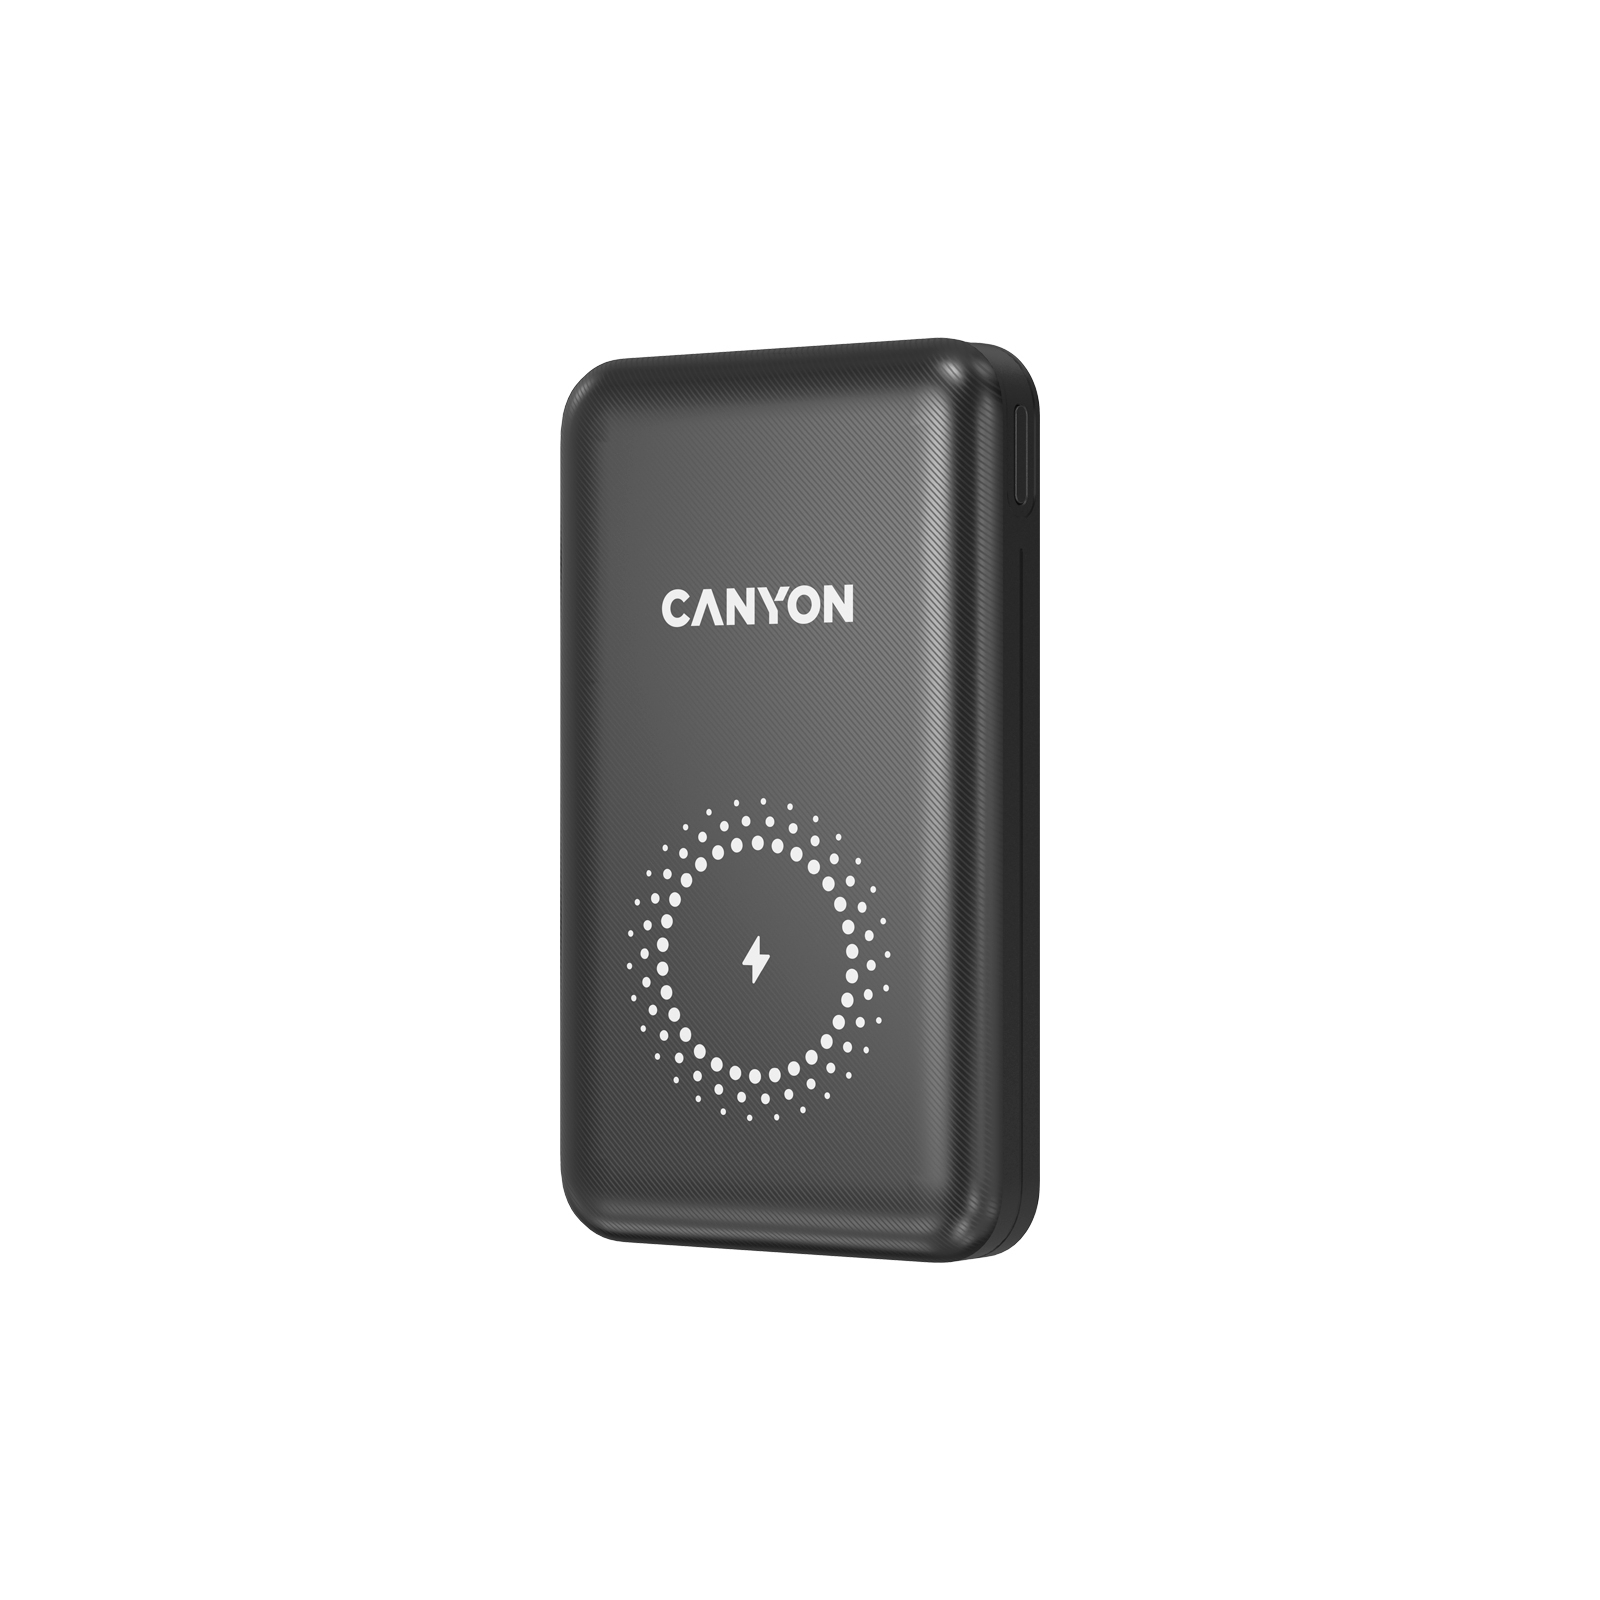 Батарея универсальная Canyon PB-1001 10000mAh, PD/18W, QC/3.0 +10W Magnet wireless charger, black (CNS-CPB1001B)